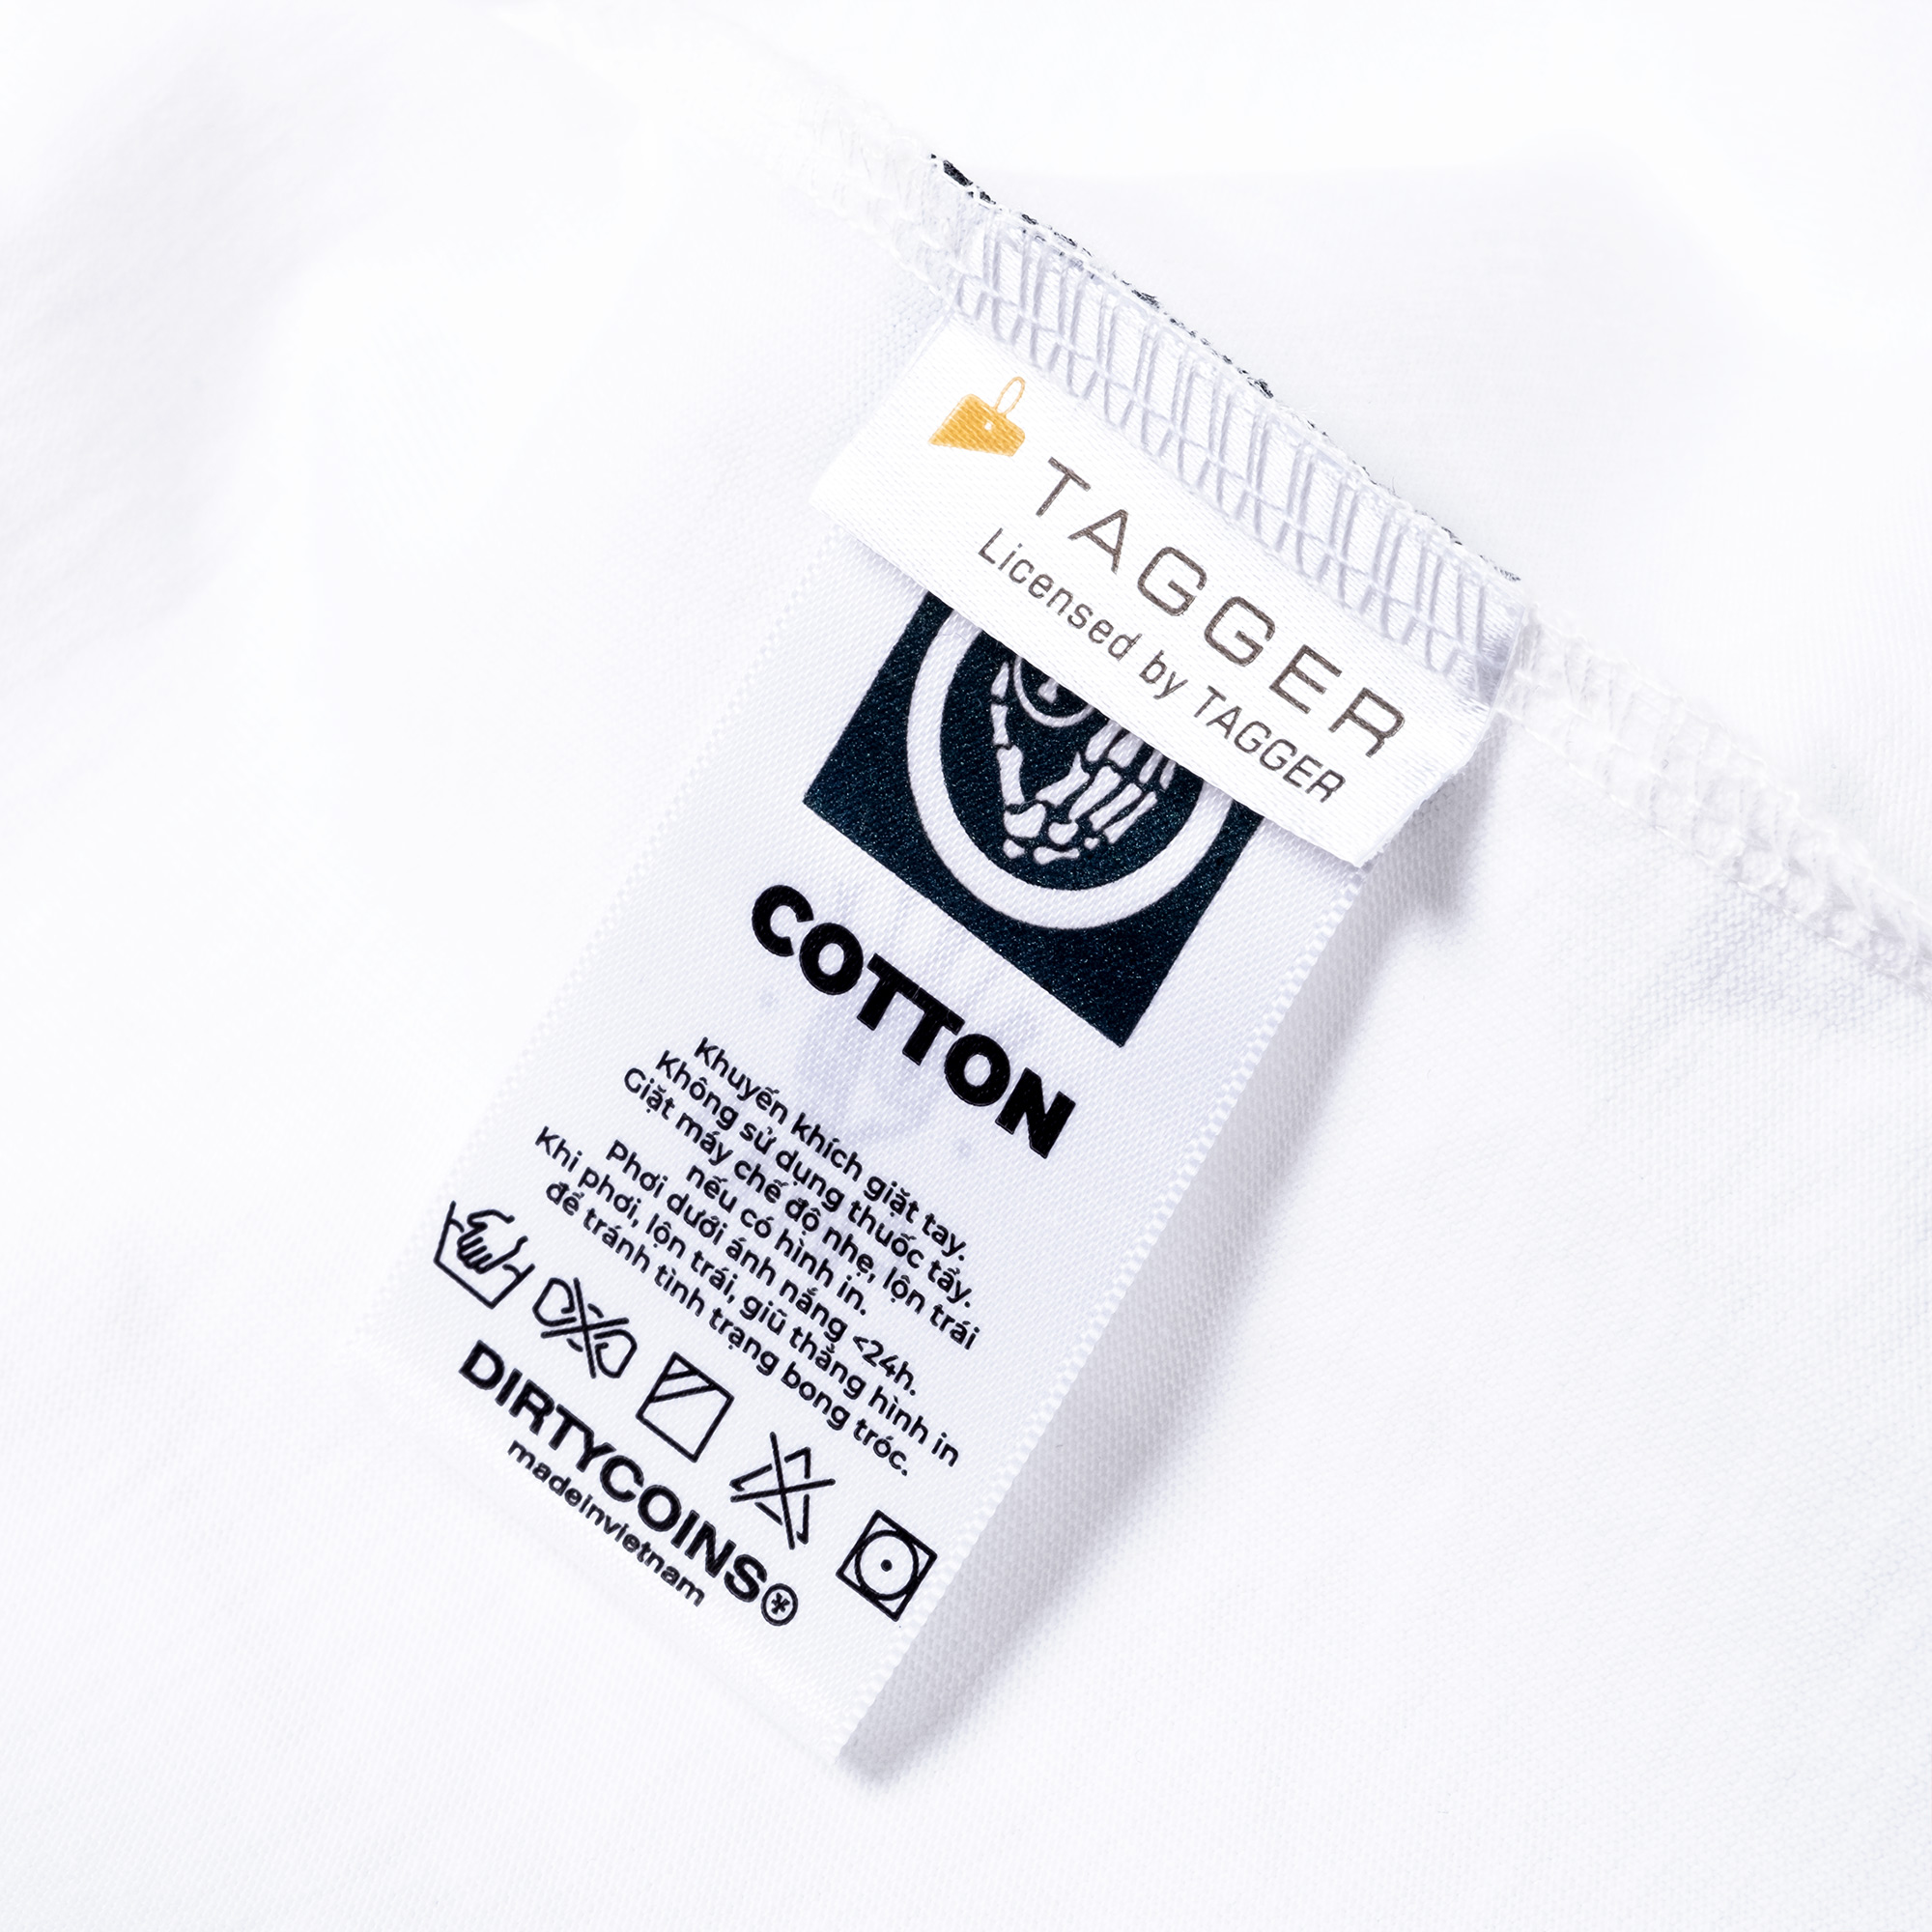 DC x OP Luffy Over Print T-shirt - White